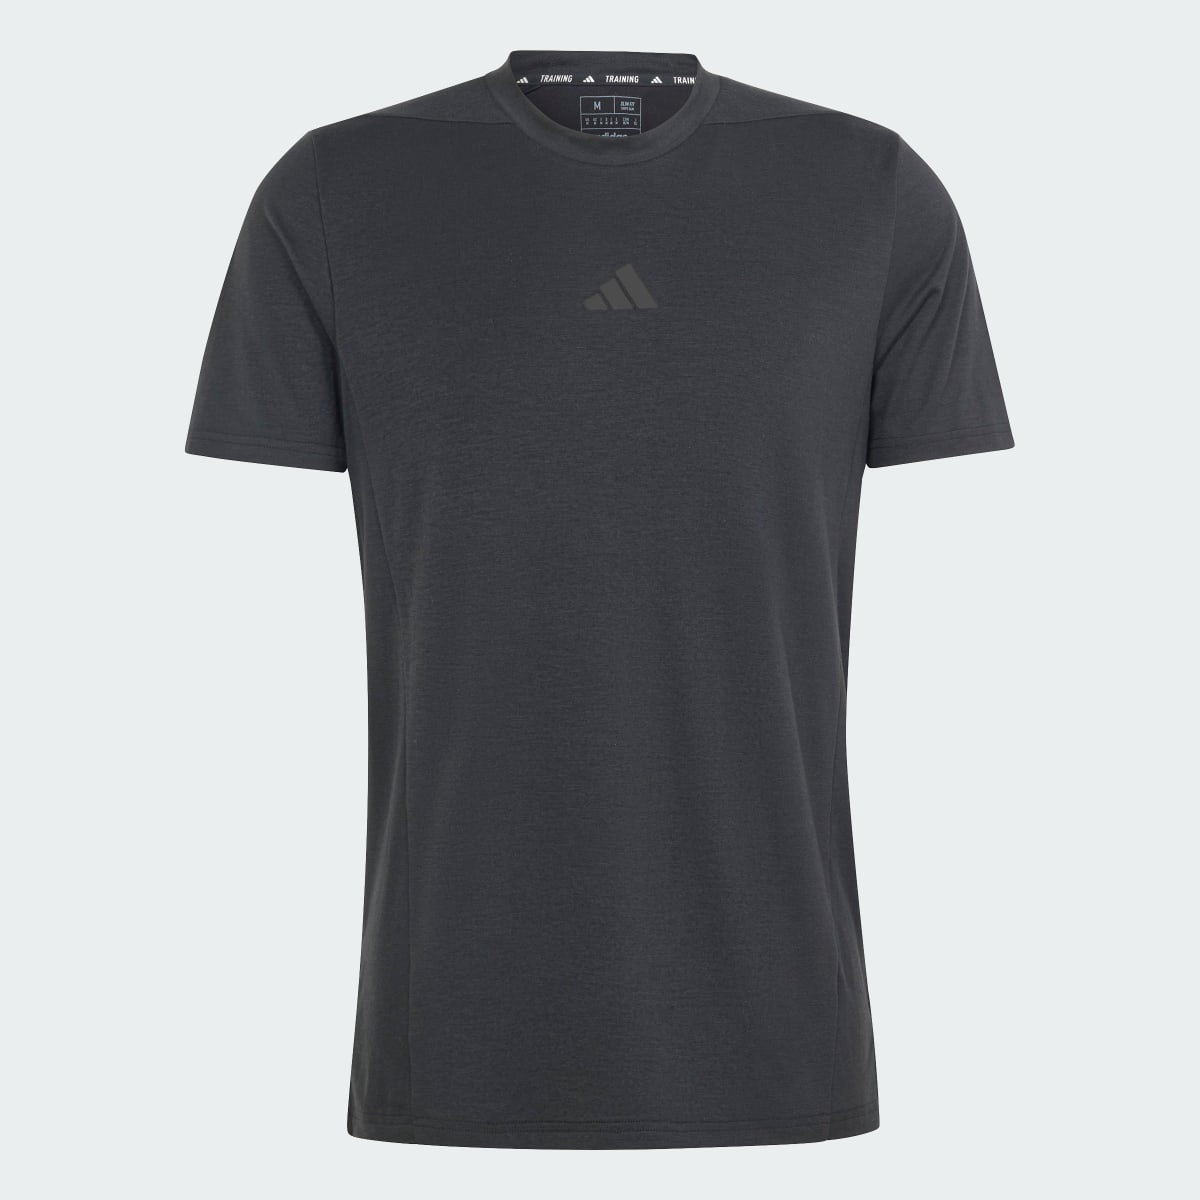 Adidas T-shirt Designed for Training. 5